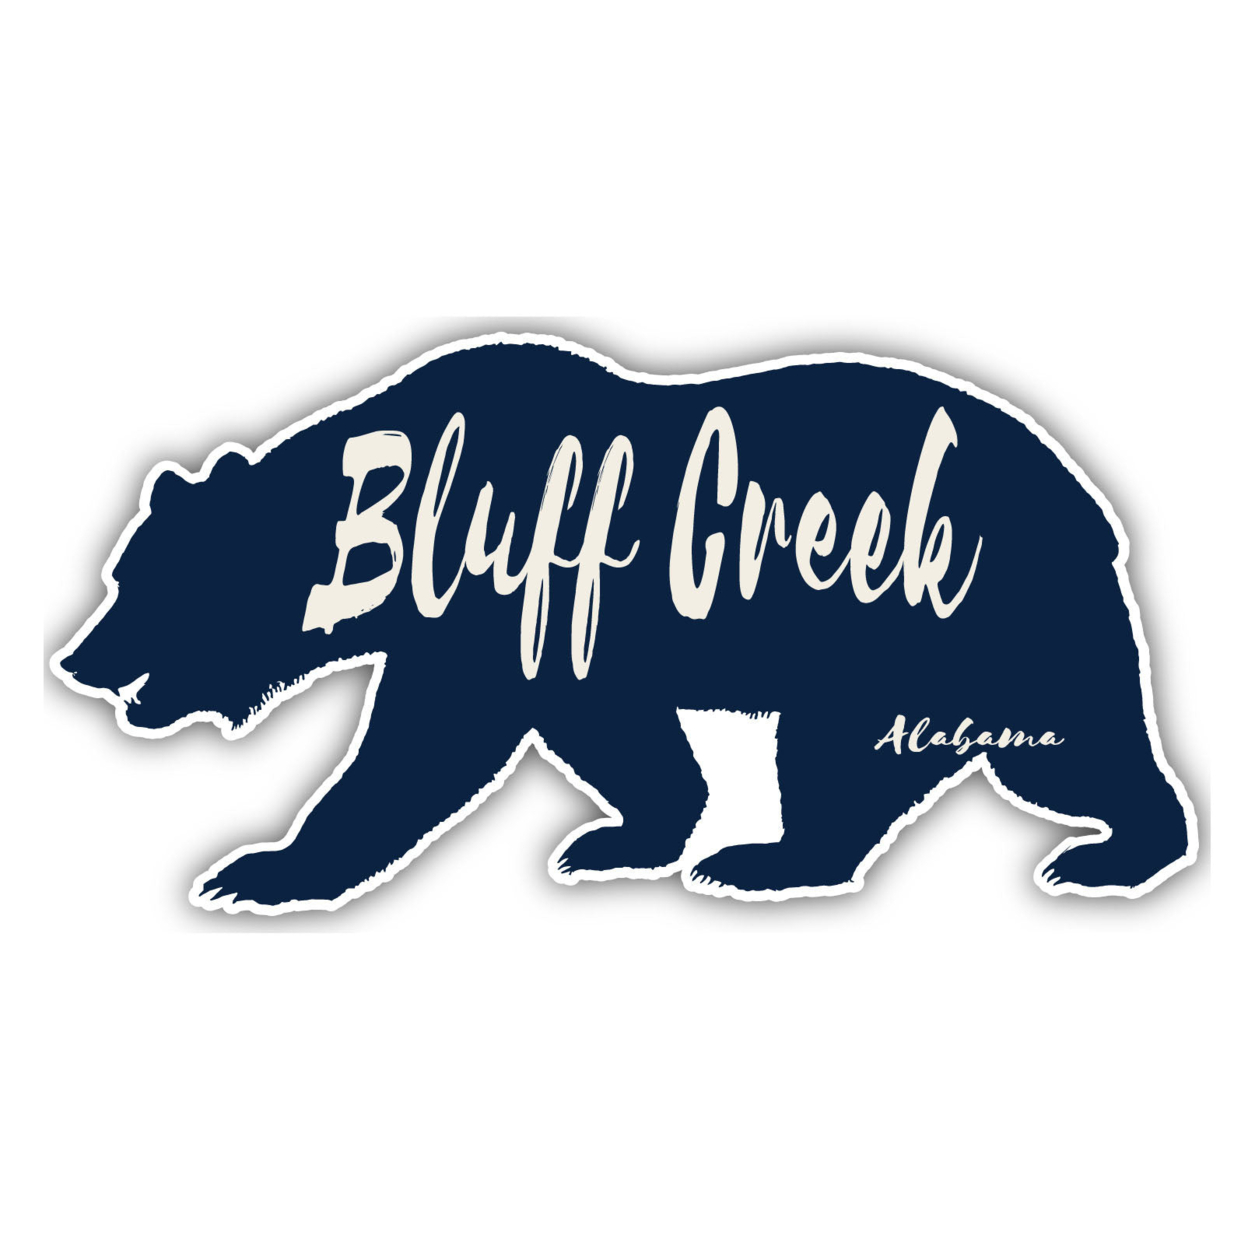 Bluff Creek Alabama Souvenir Decorative Stickers (Choose Theme And Size) - 4-Pack, 8-Inch, Bear